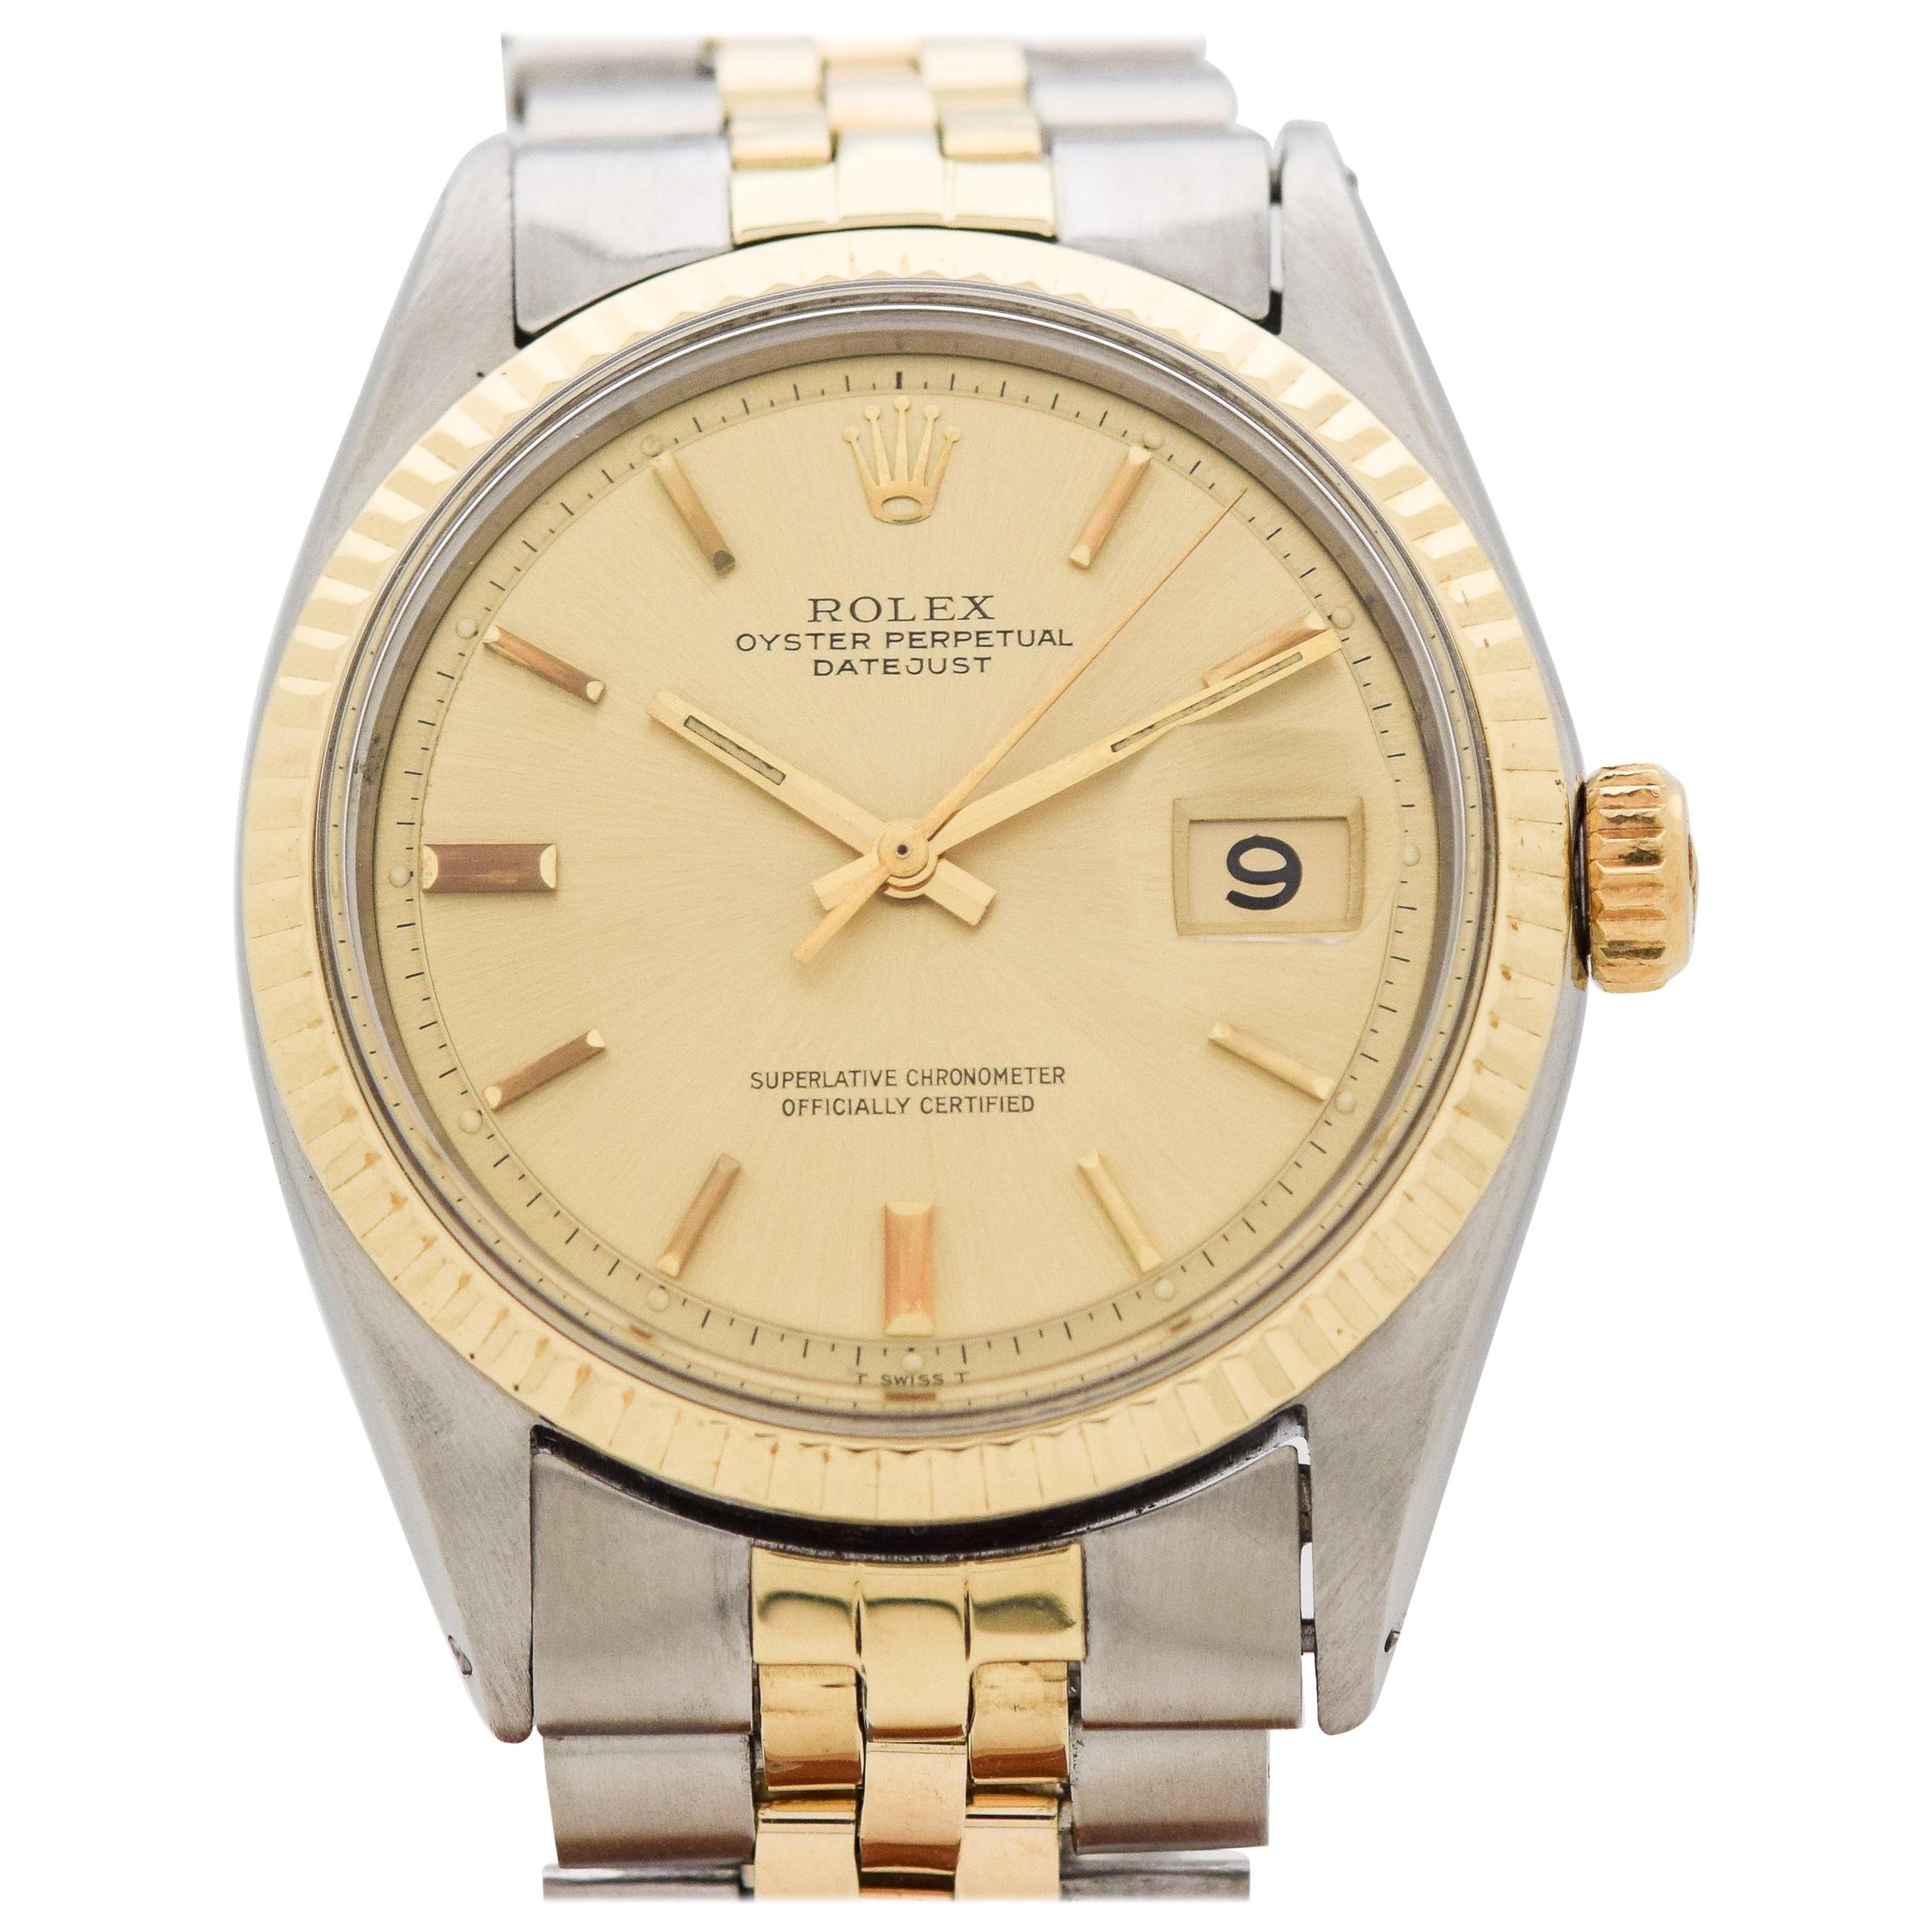 Vintage Rolex Datejust 14 Karat Yellow Gold and Stainless Steel Watch, 1971